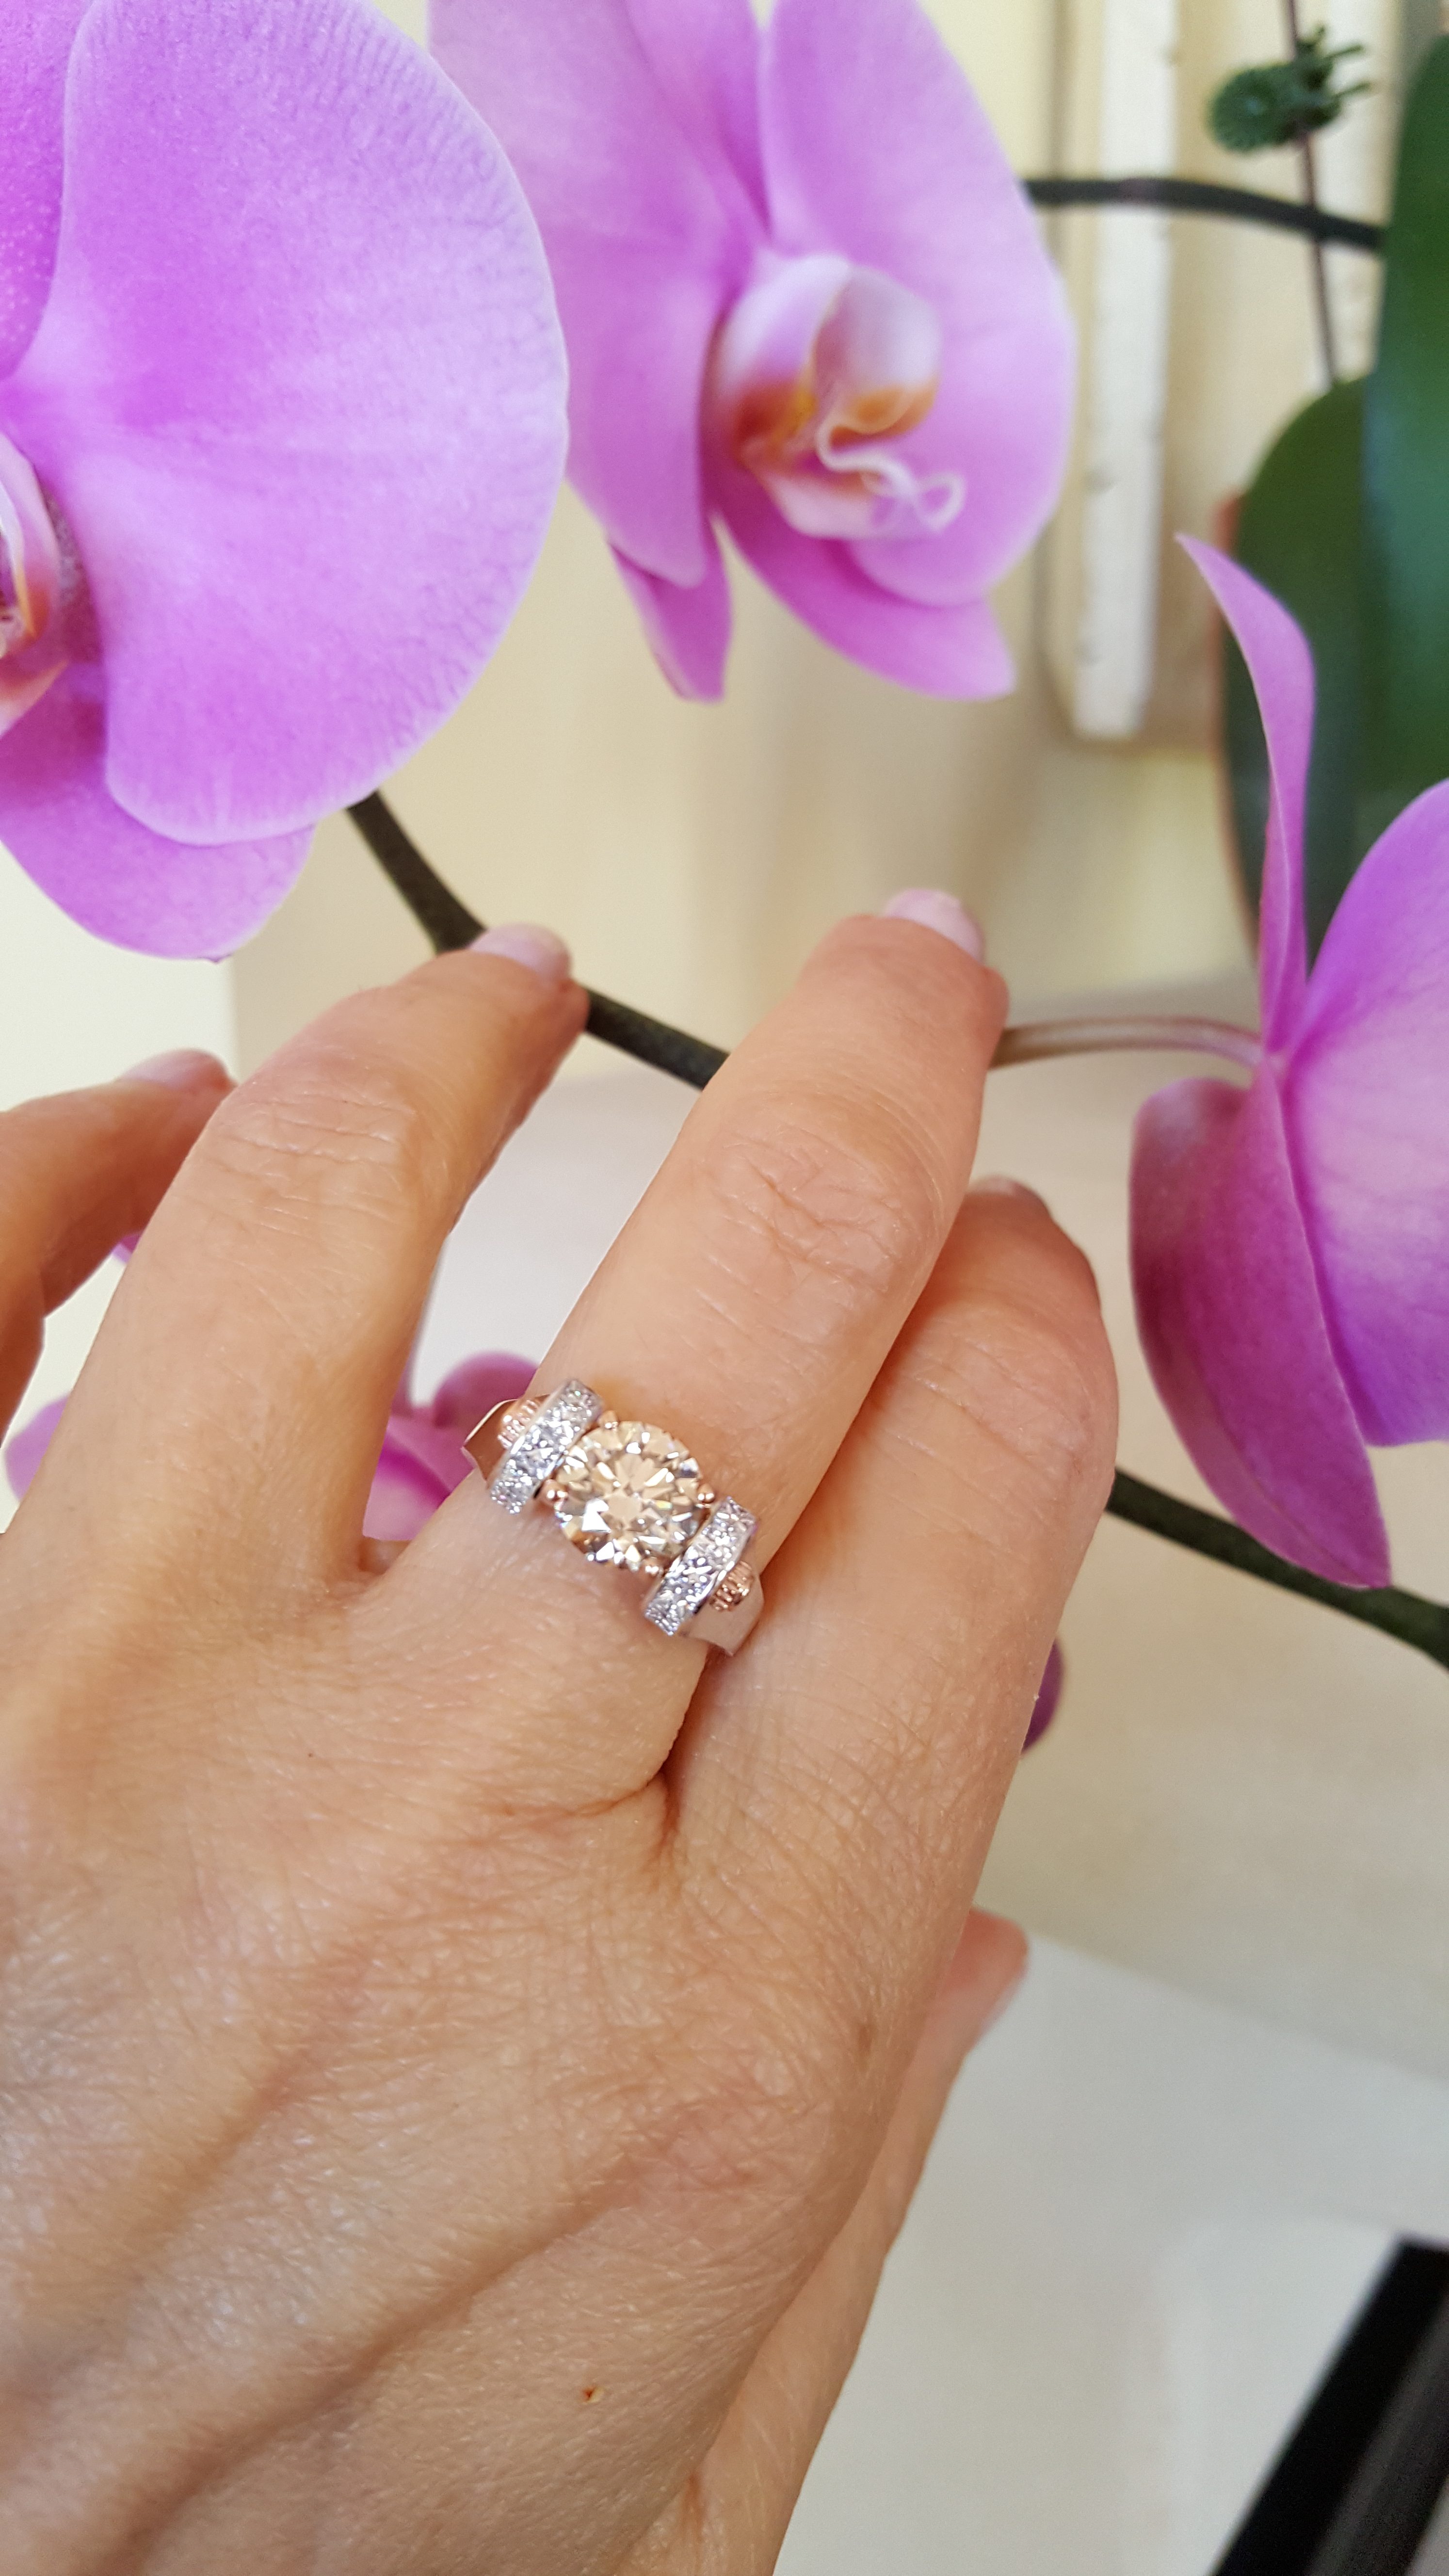 White & Rose gold engagement ring